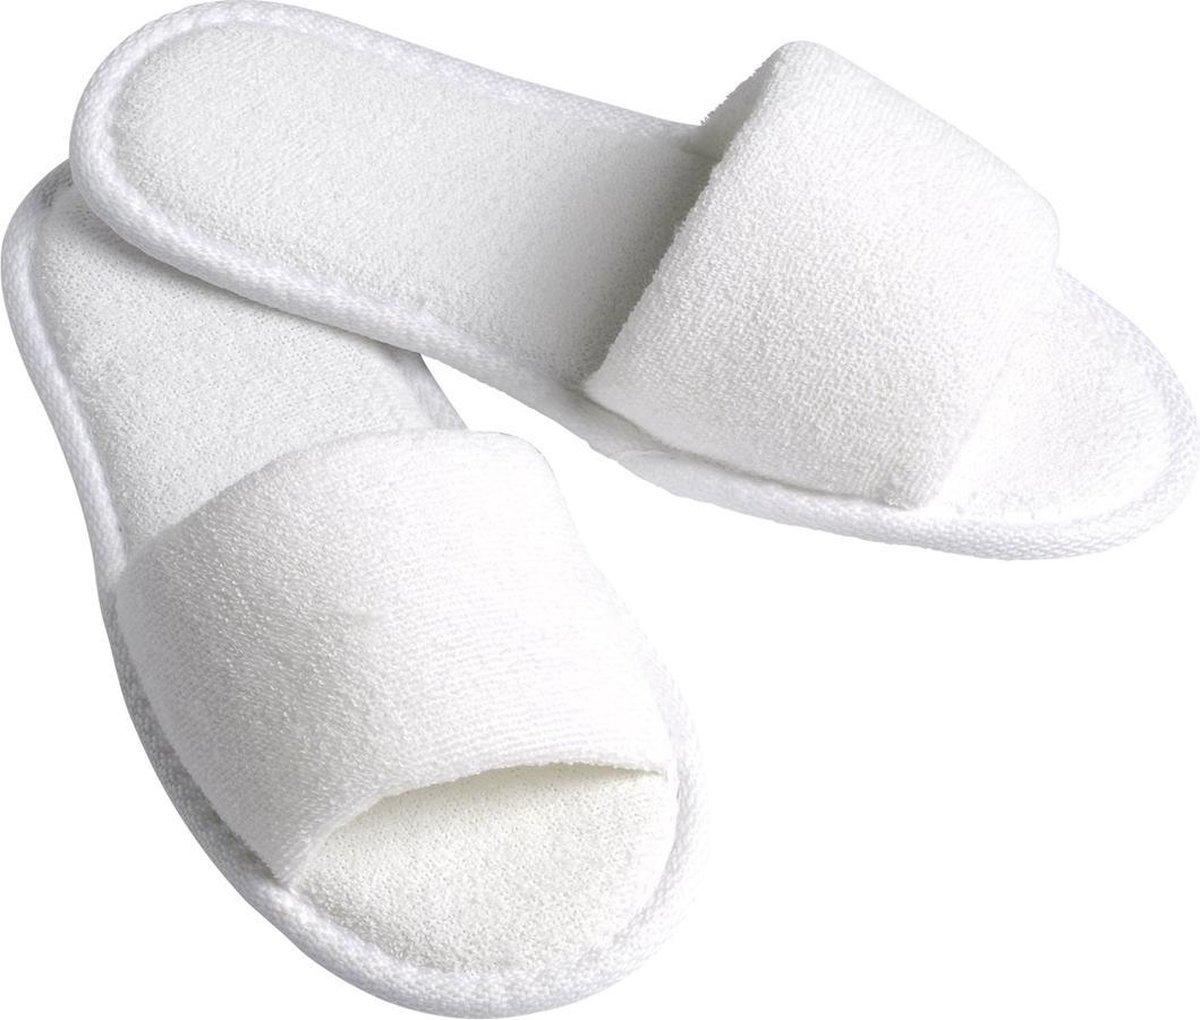 bol.com | Hotel slippers met rubberen zool - Open teen (one size)